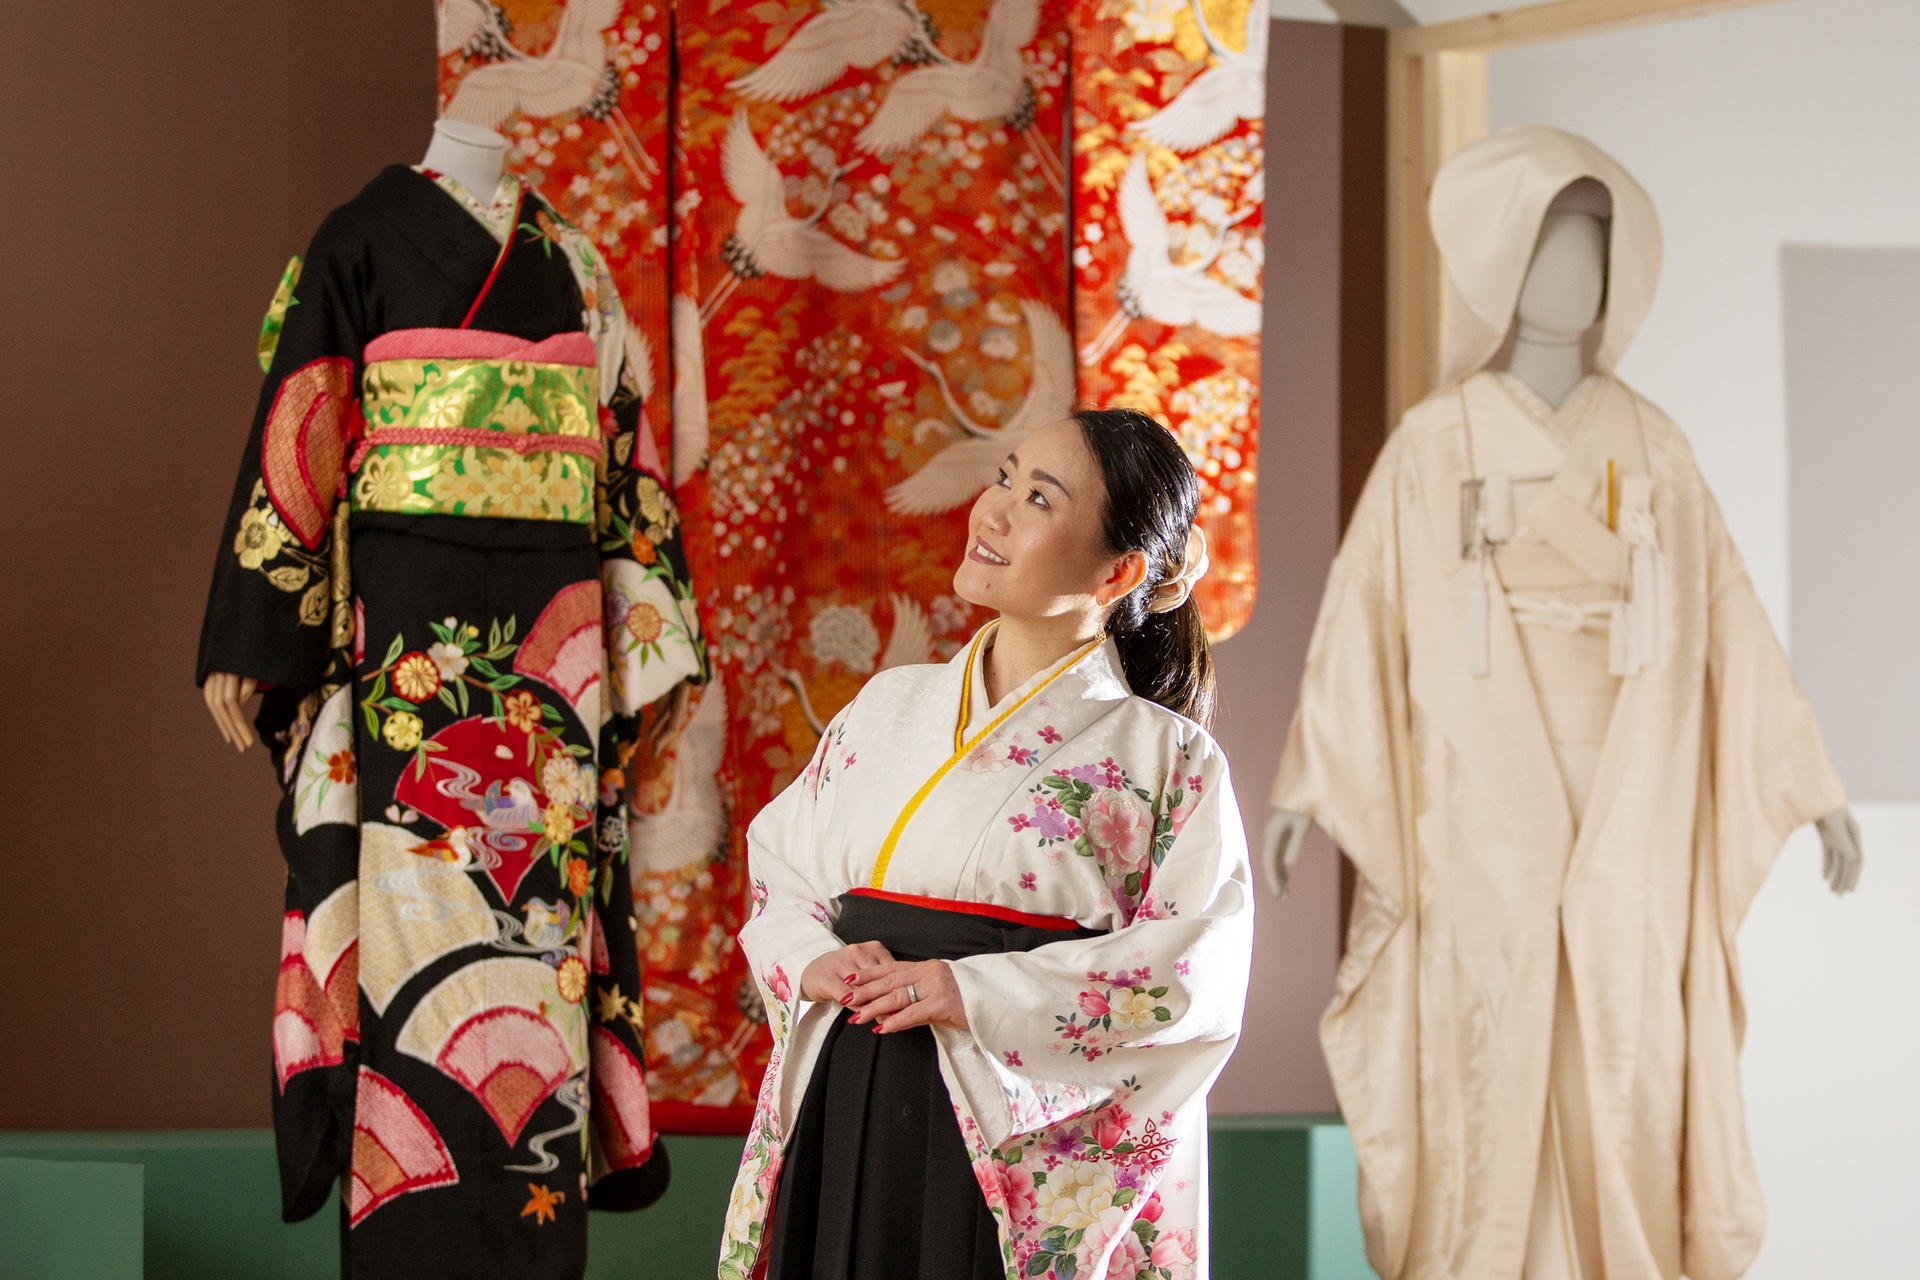 Kimono: Kyoto to Catwalk opening at VA Dundee.Pictured: Japanese Artist Tomoko Rowell.